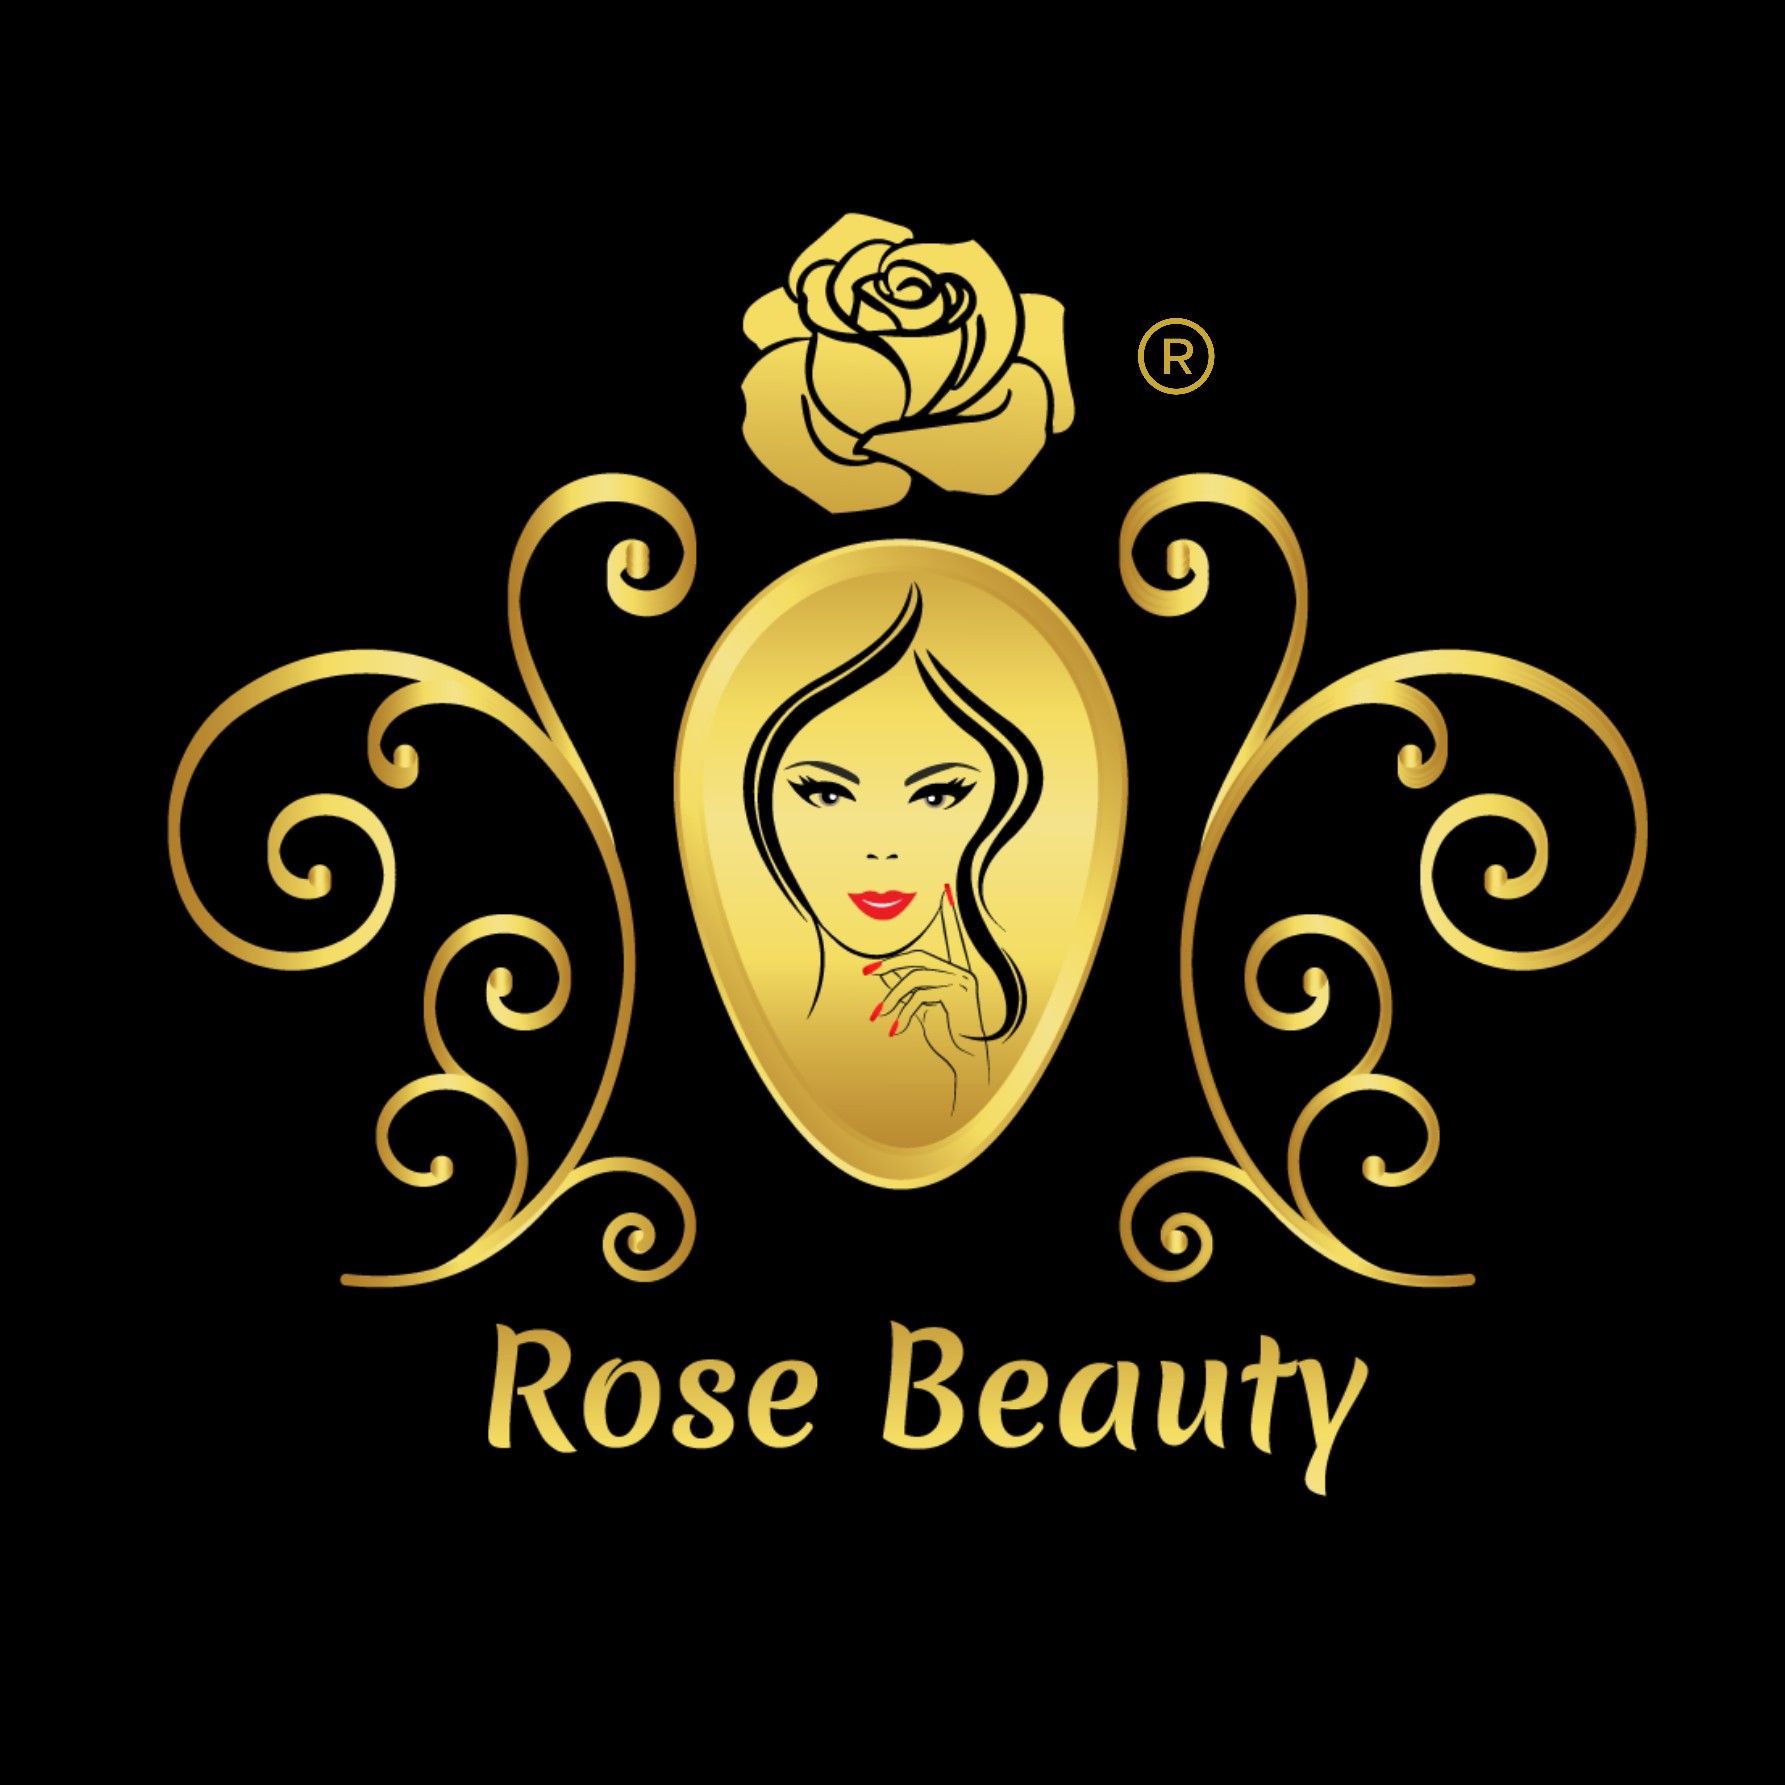 Rose Beauty Ltd, 38b Hankinson Way, Salford Shopping Centre, M6 5JA, Salford